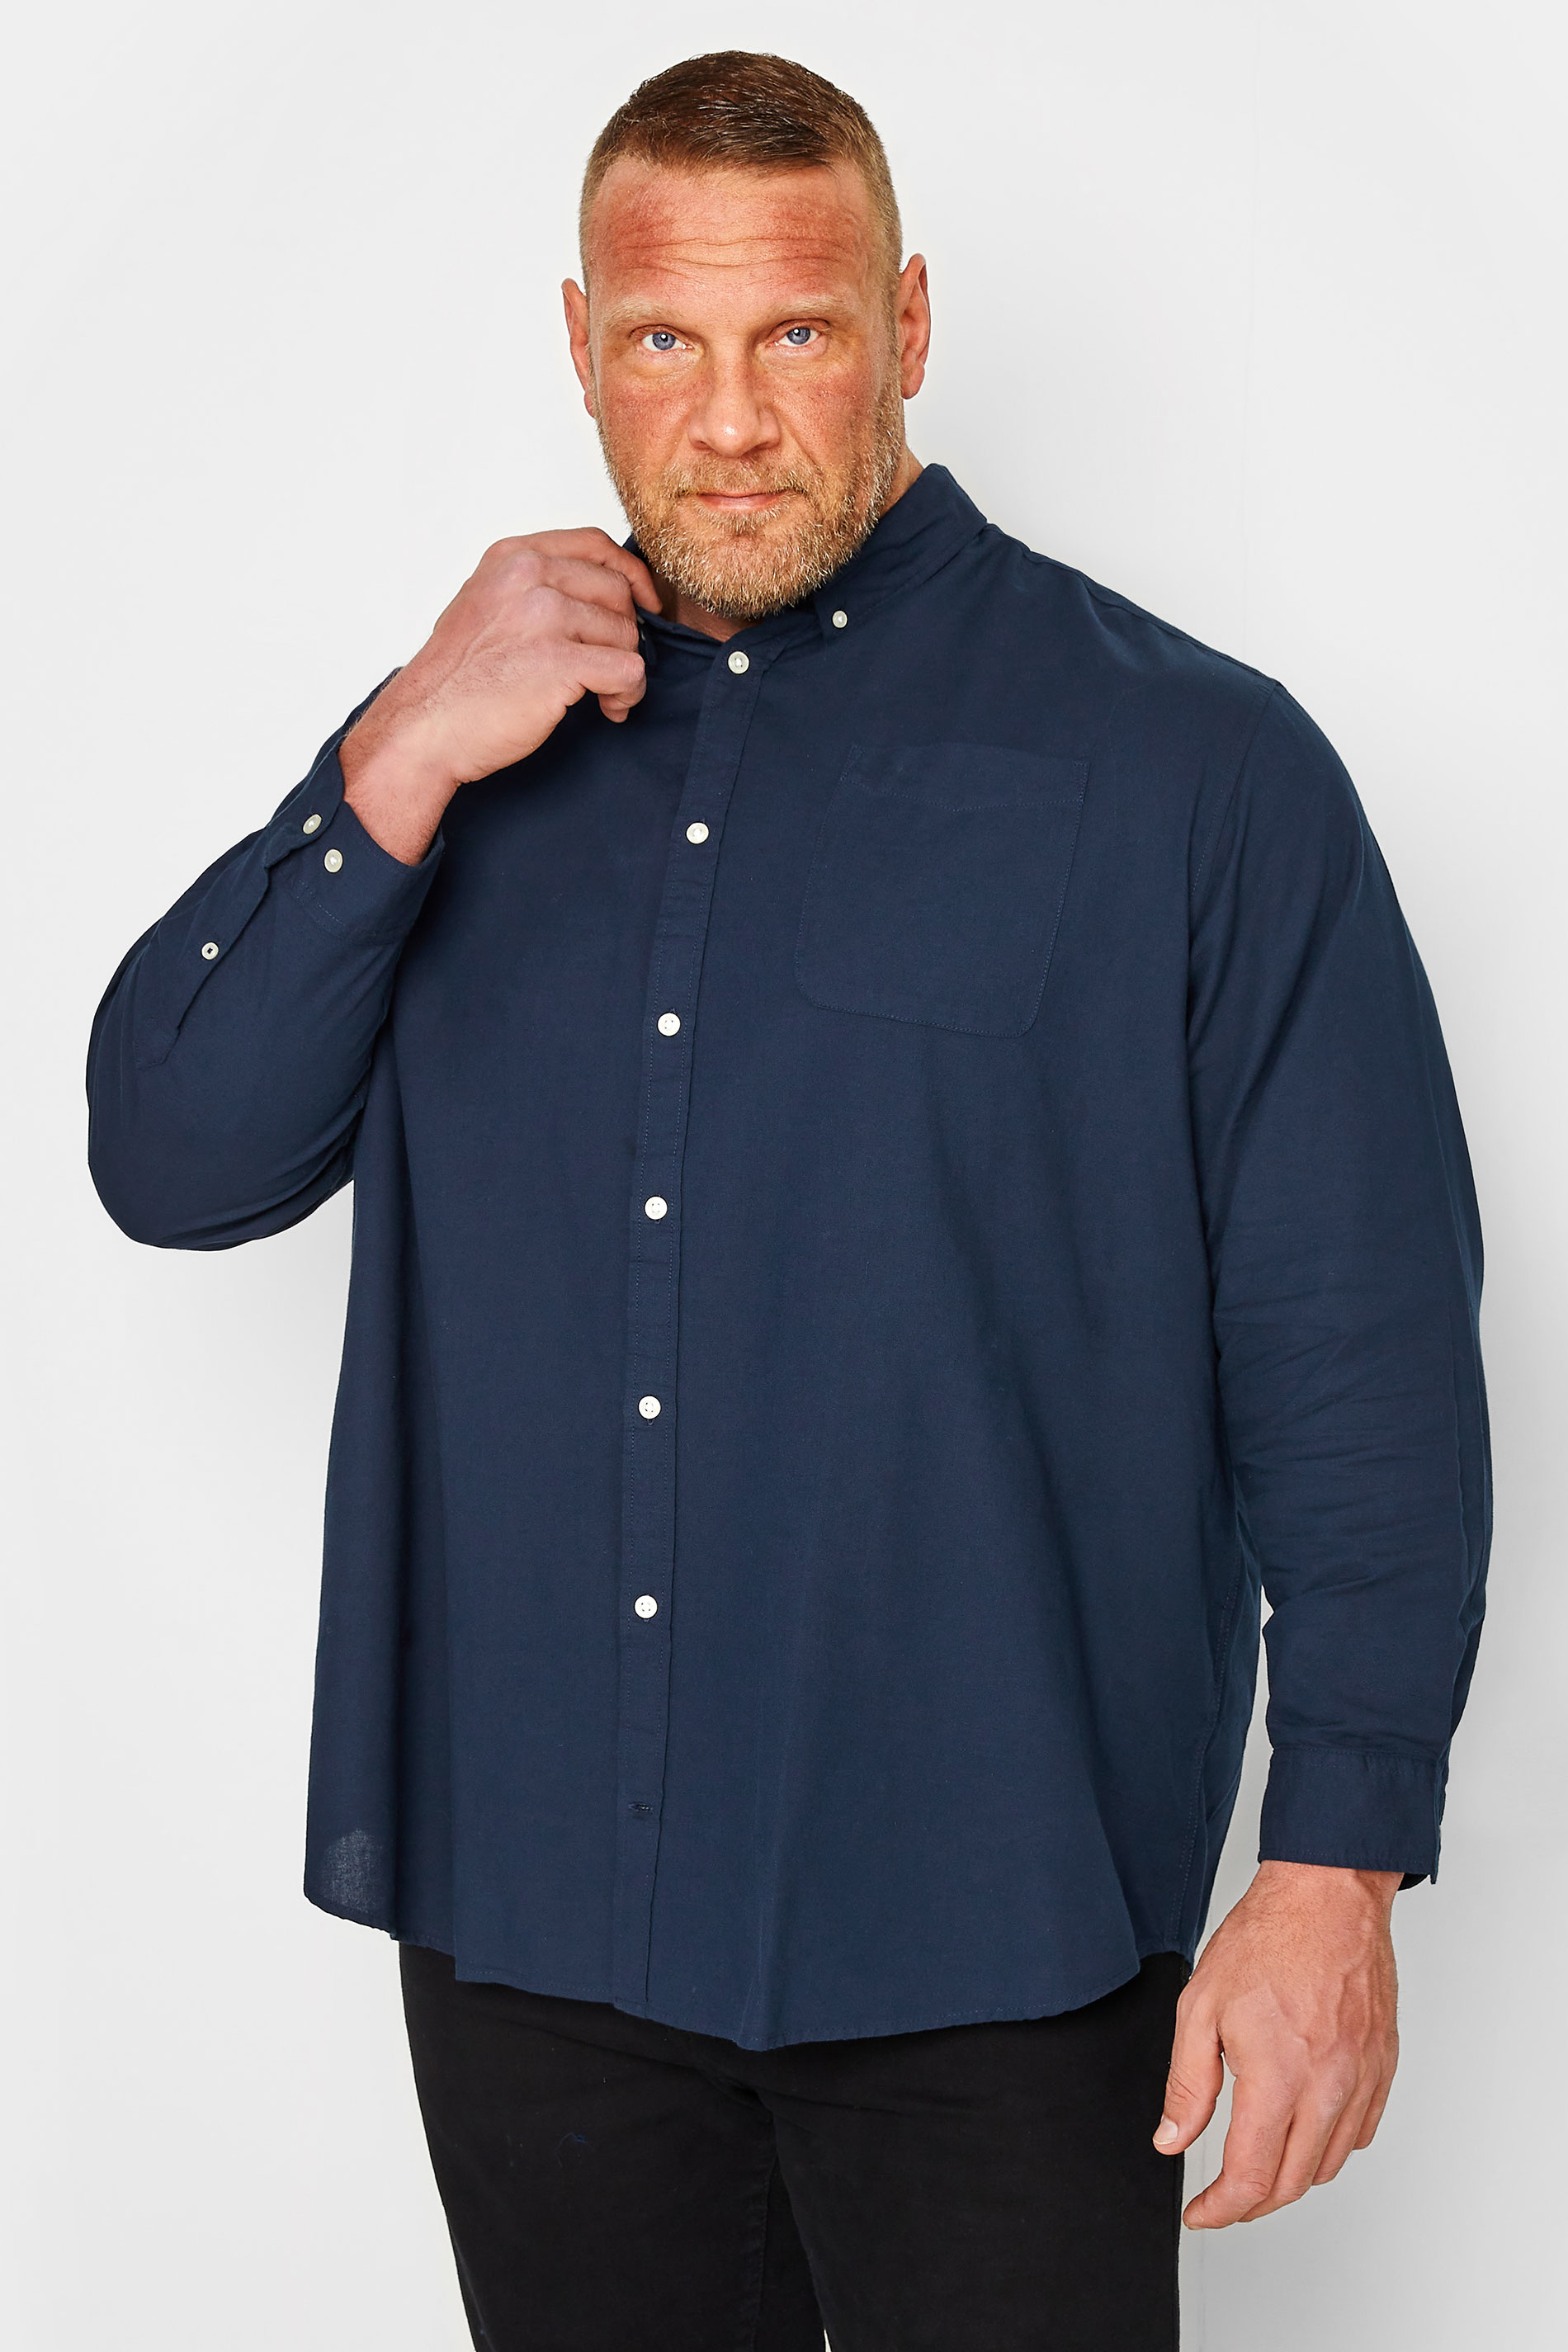 Image of Size 1Xl Mens Jack & Jones Big & Tall Navy Blue Oxford Shirt Big & Tall